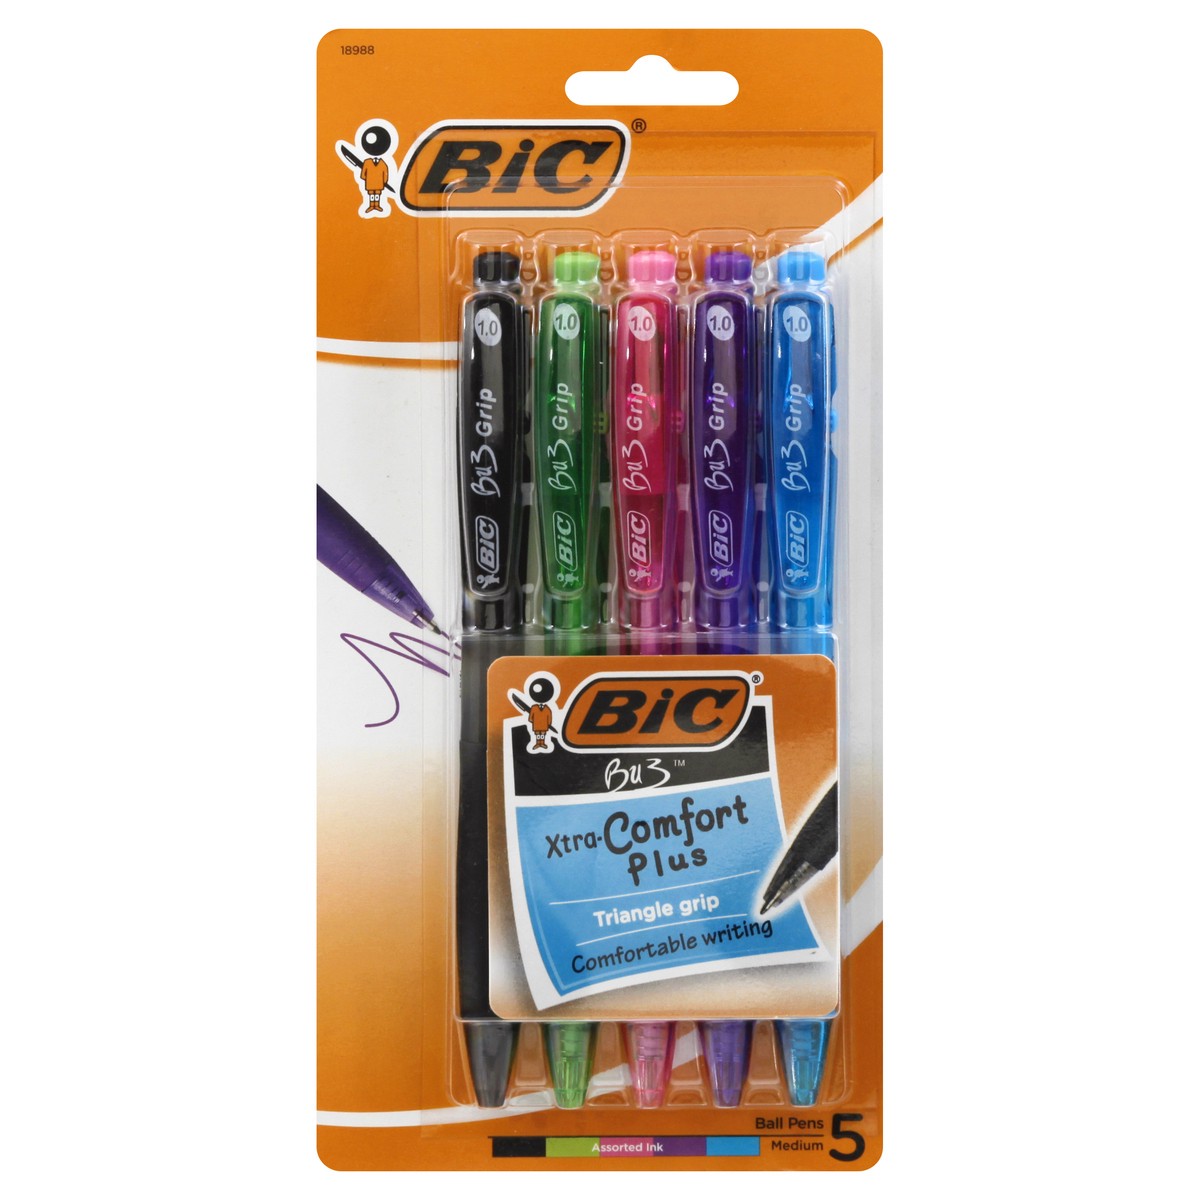 slide 1 of 11, BIC Bu3 Grip Xtra Comfort Plus Assorted Ink Medium Ball Pens 5 ea, 5 ct